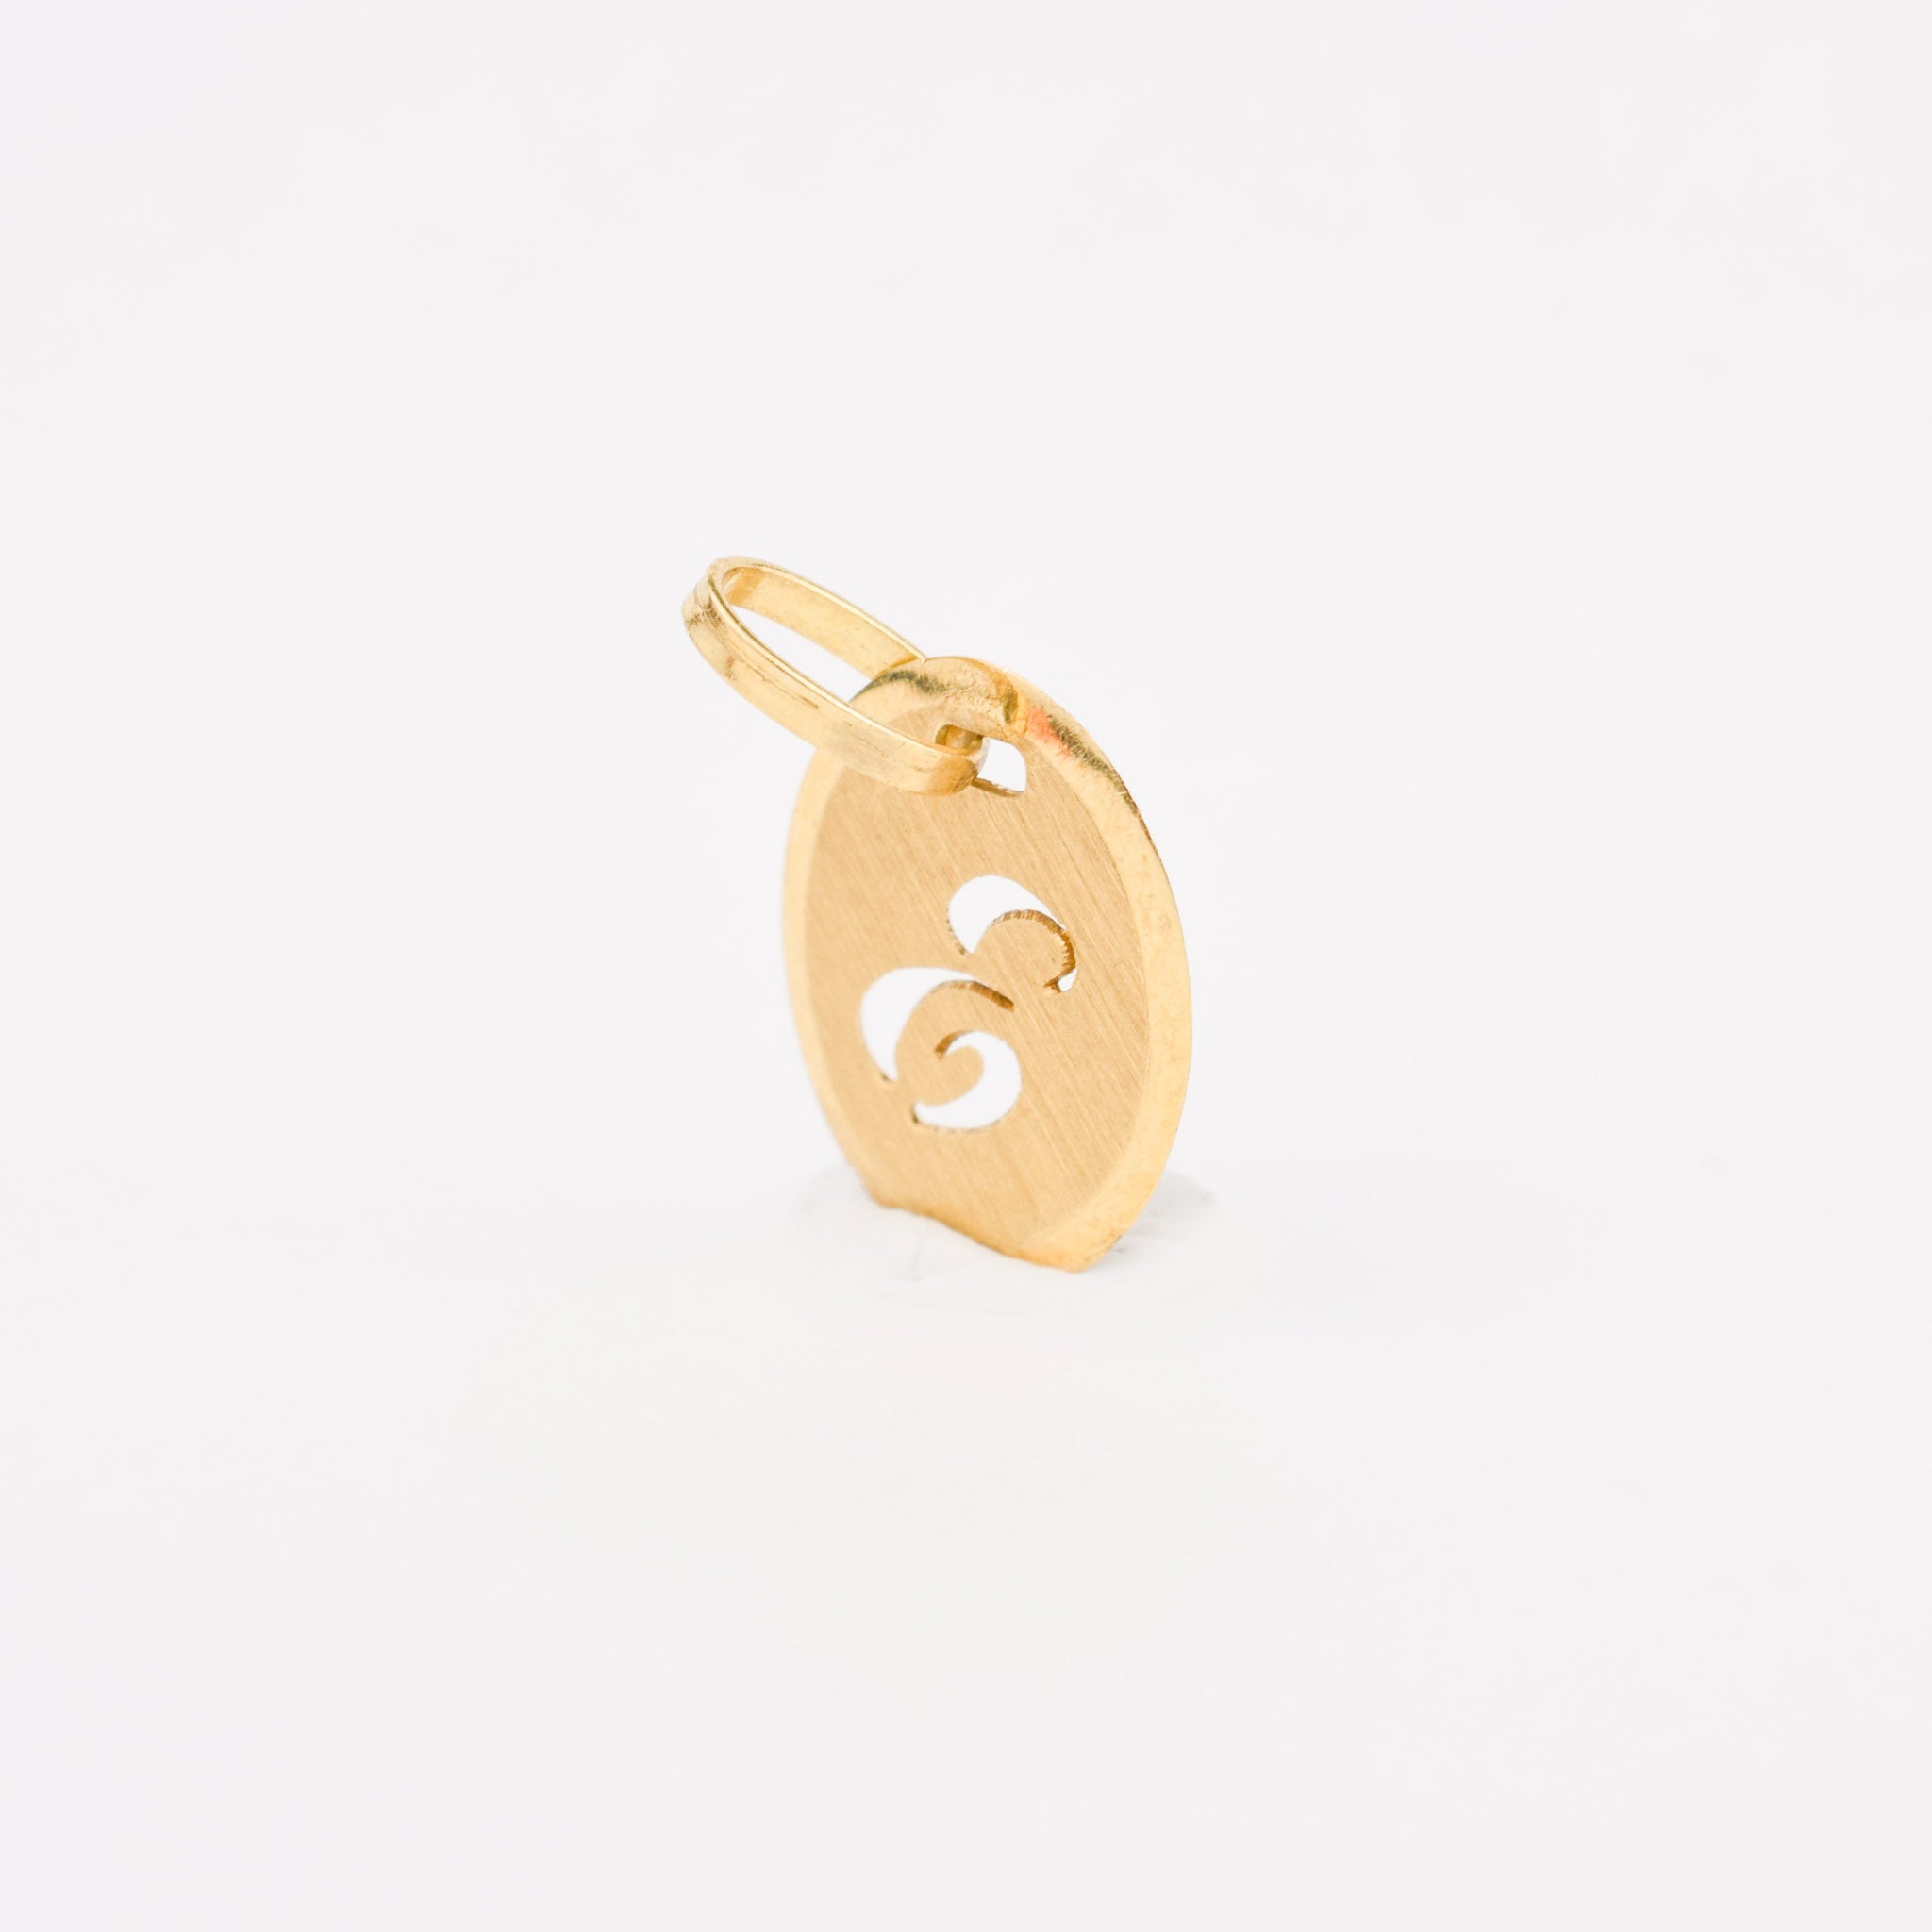 'e' gold charm pendant 